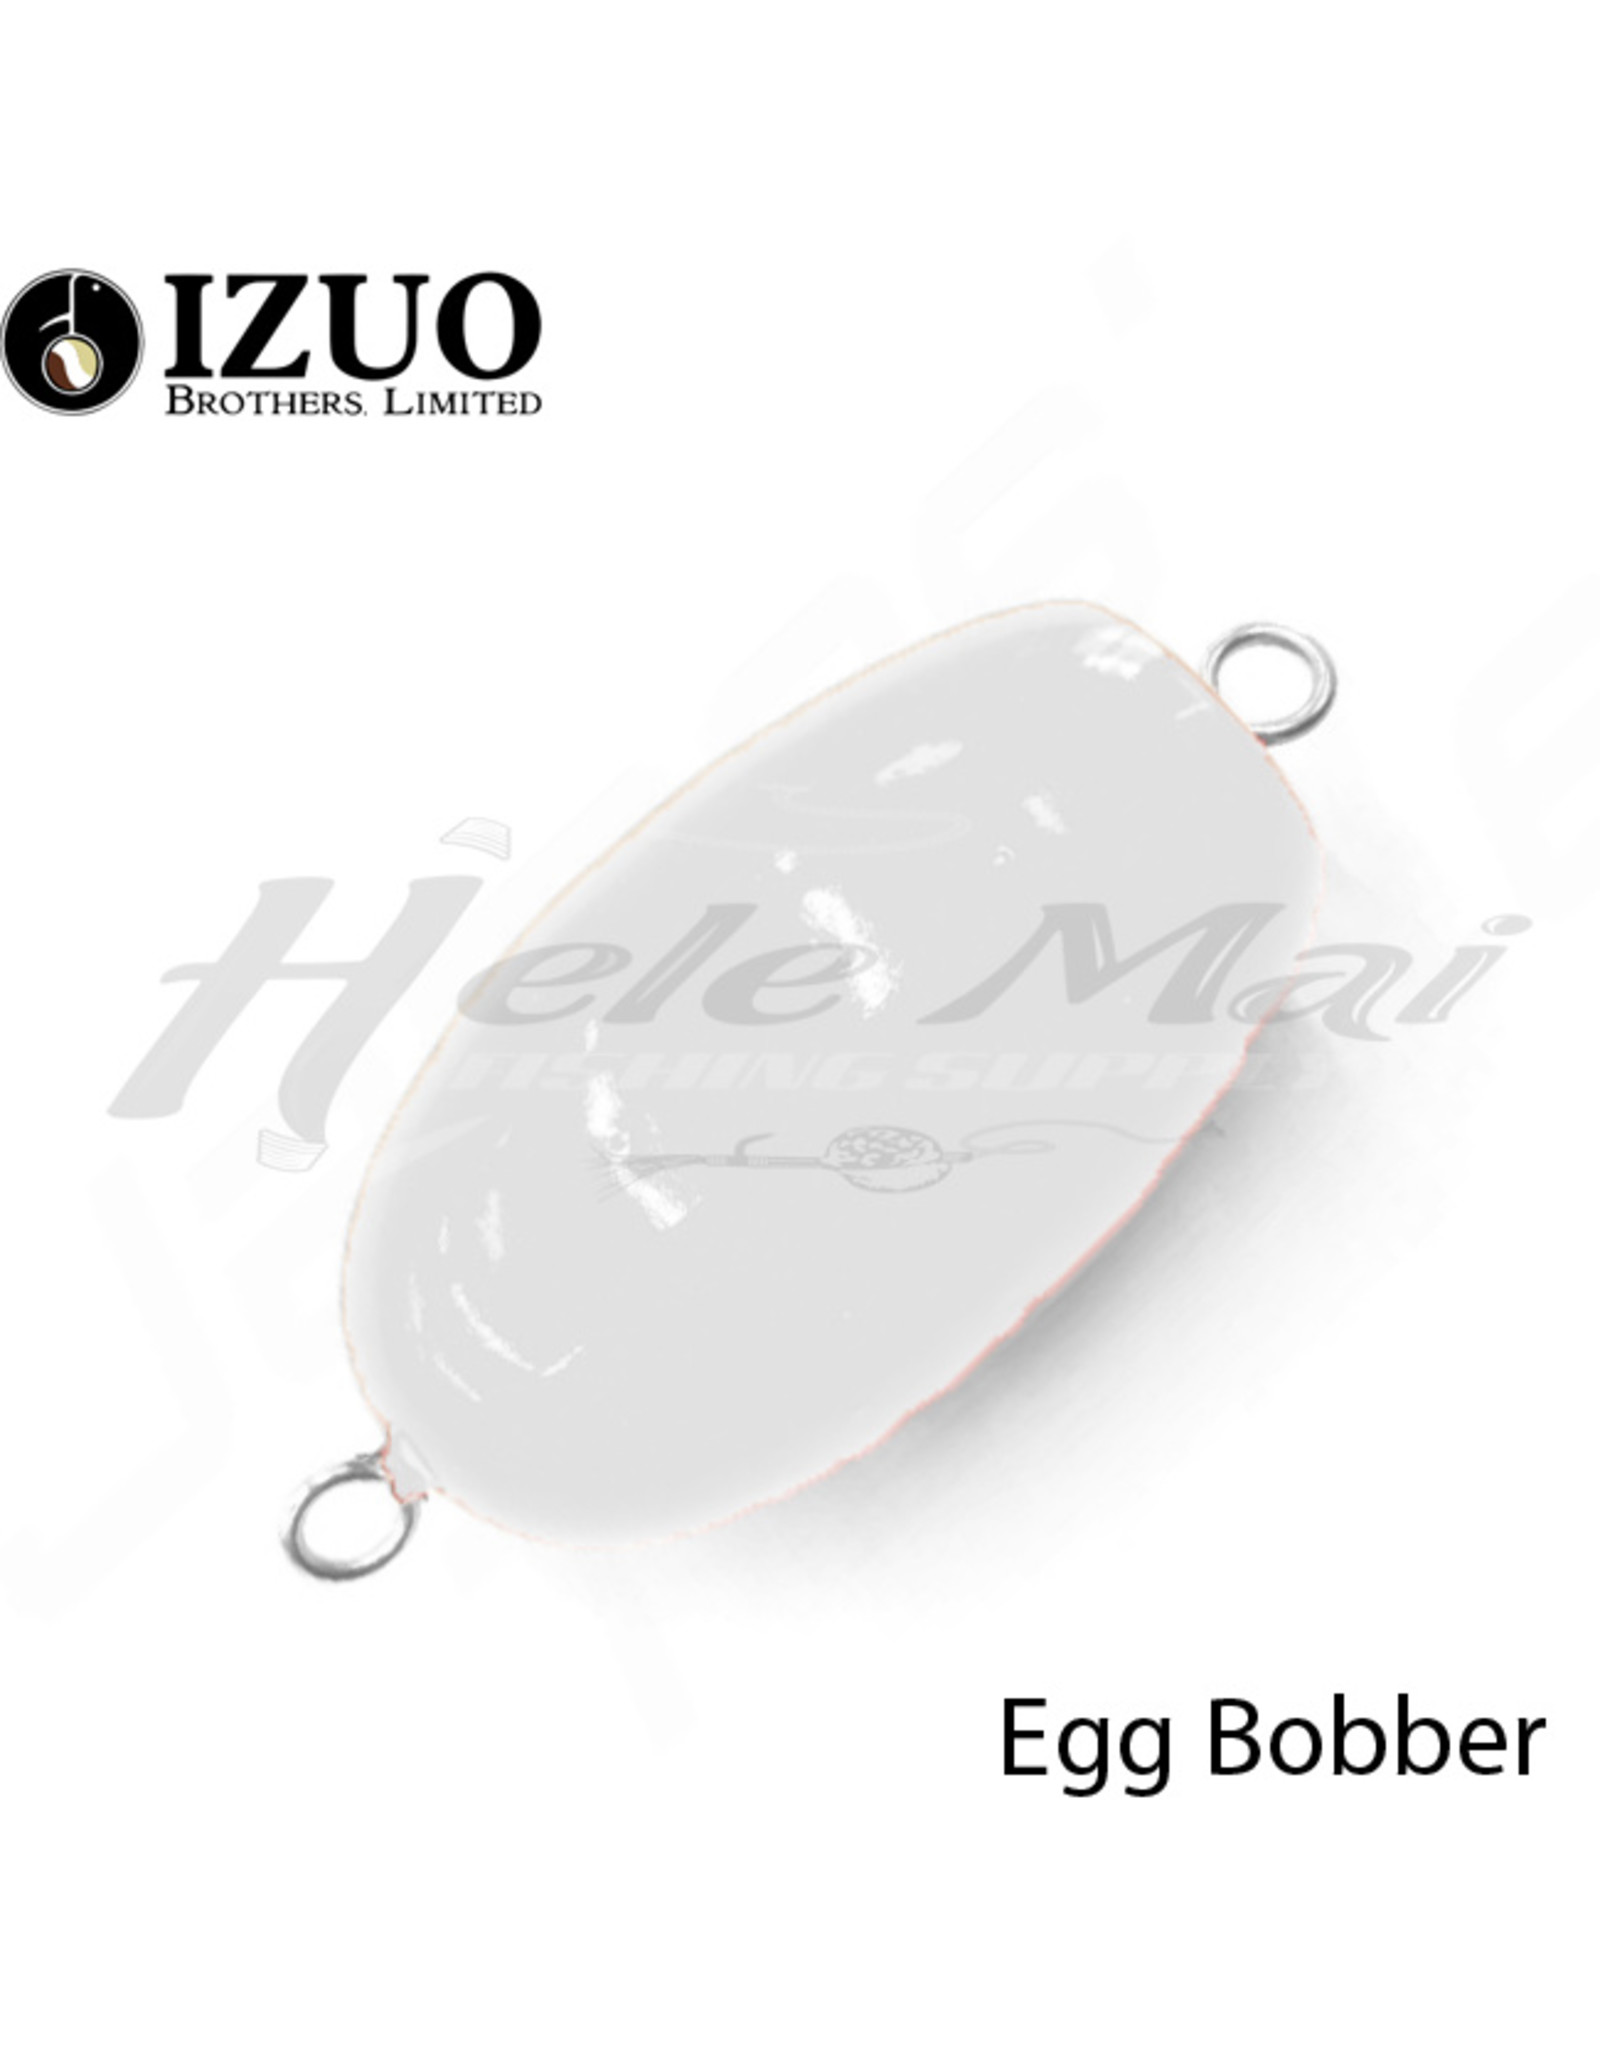 HAWAIIAN ANGLER IZUO, Egg Bobber, 3/pack